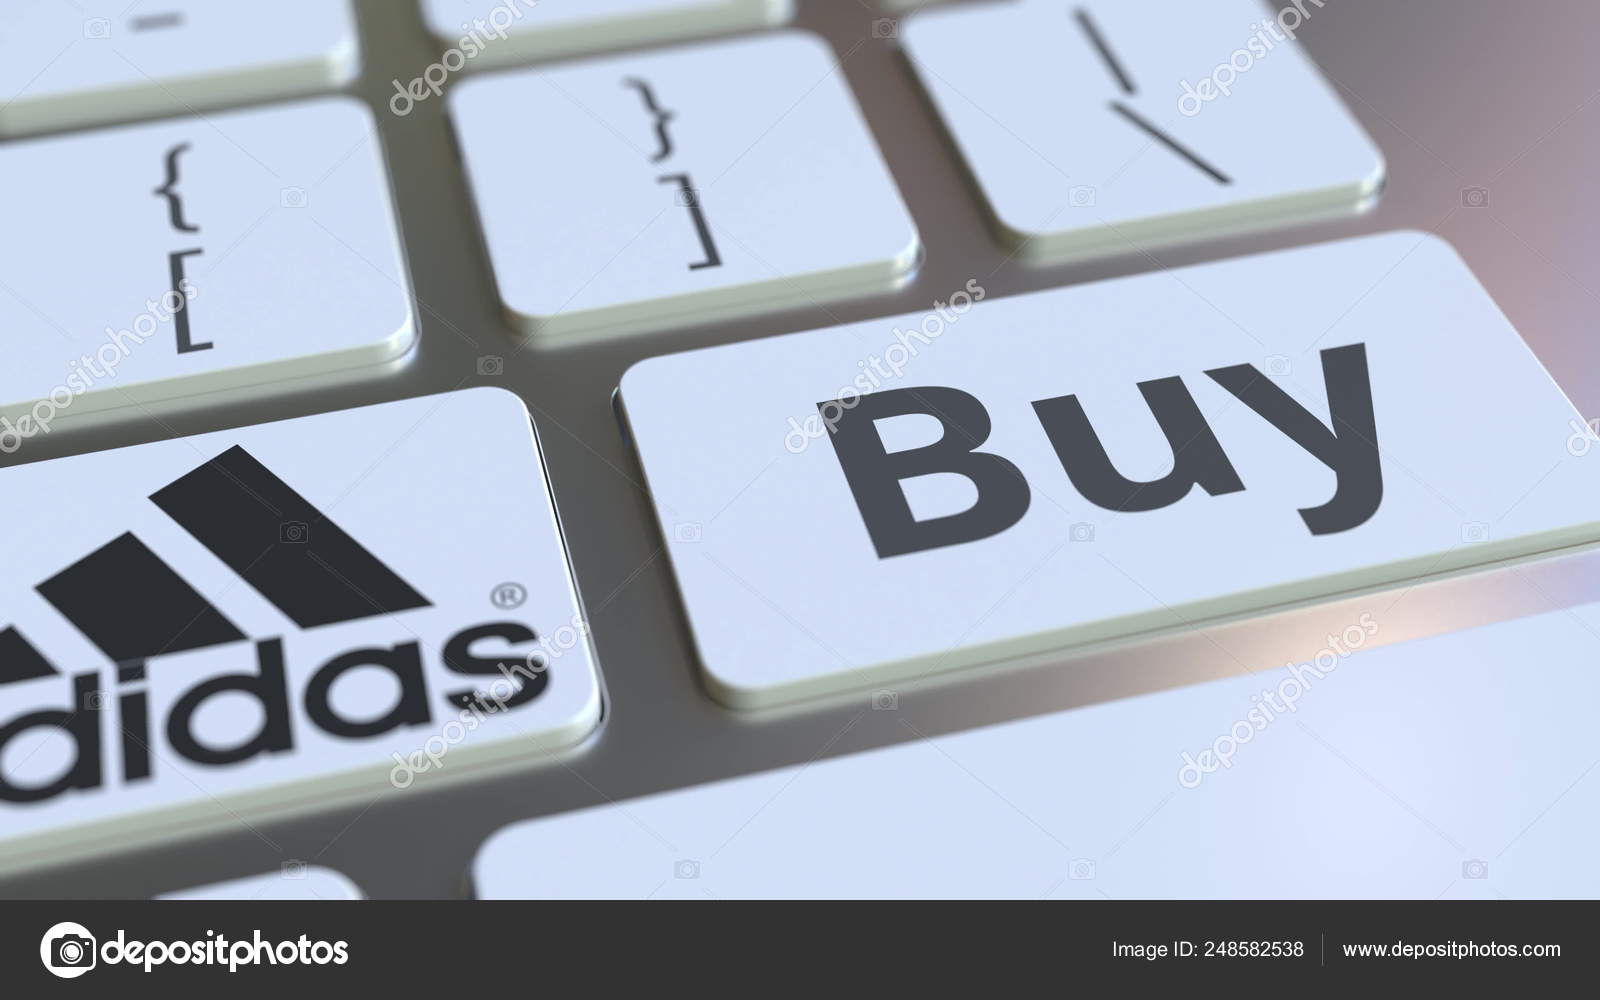 buy adidas stock